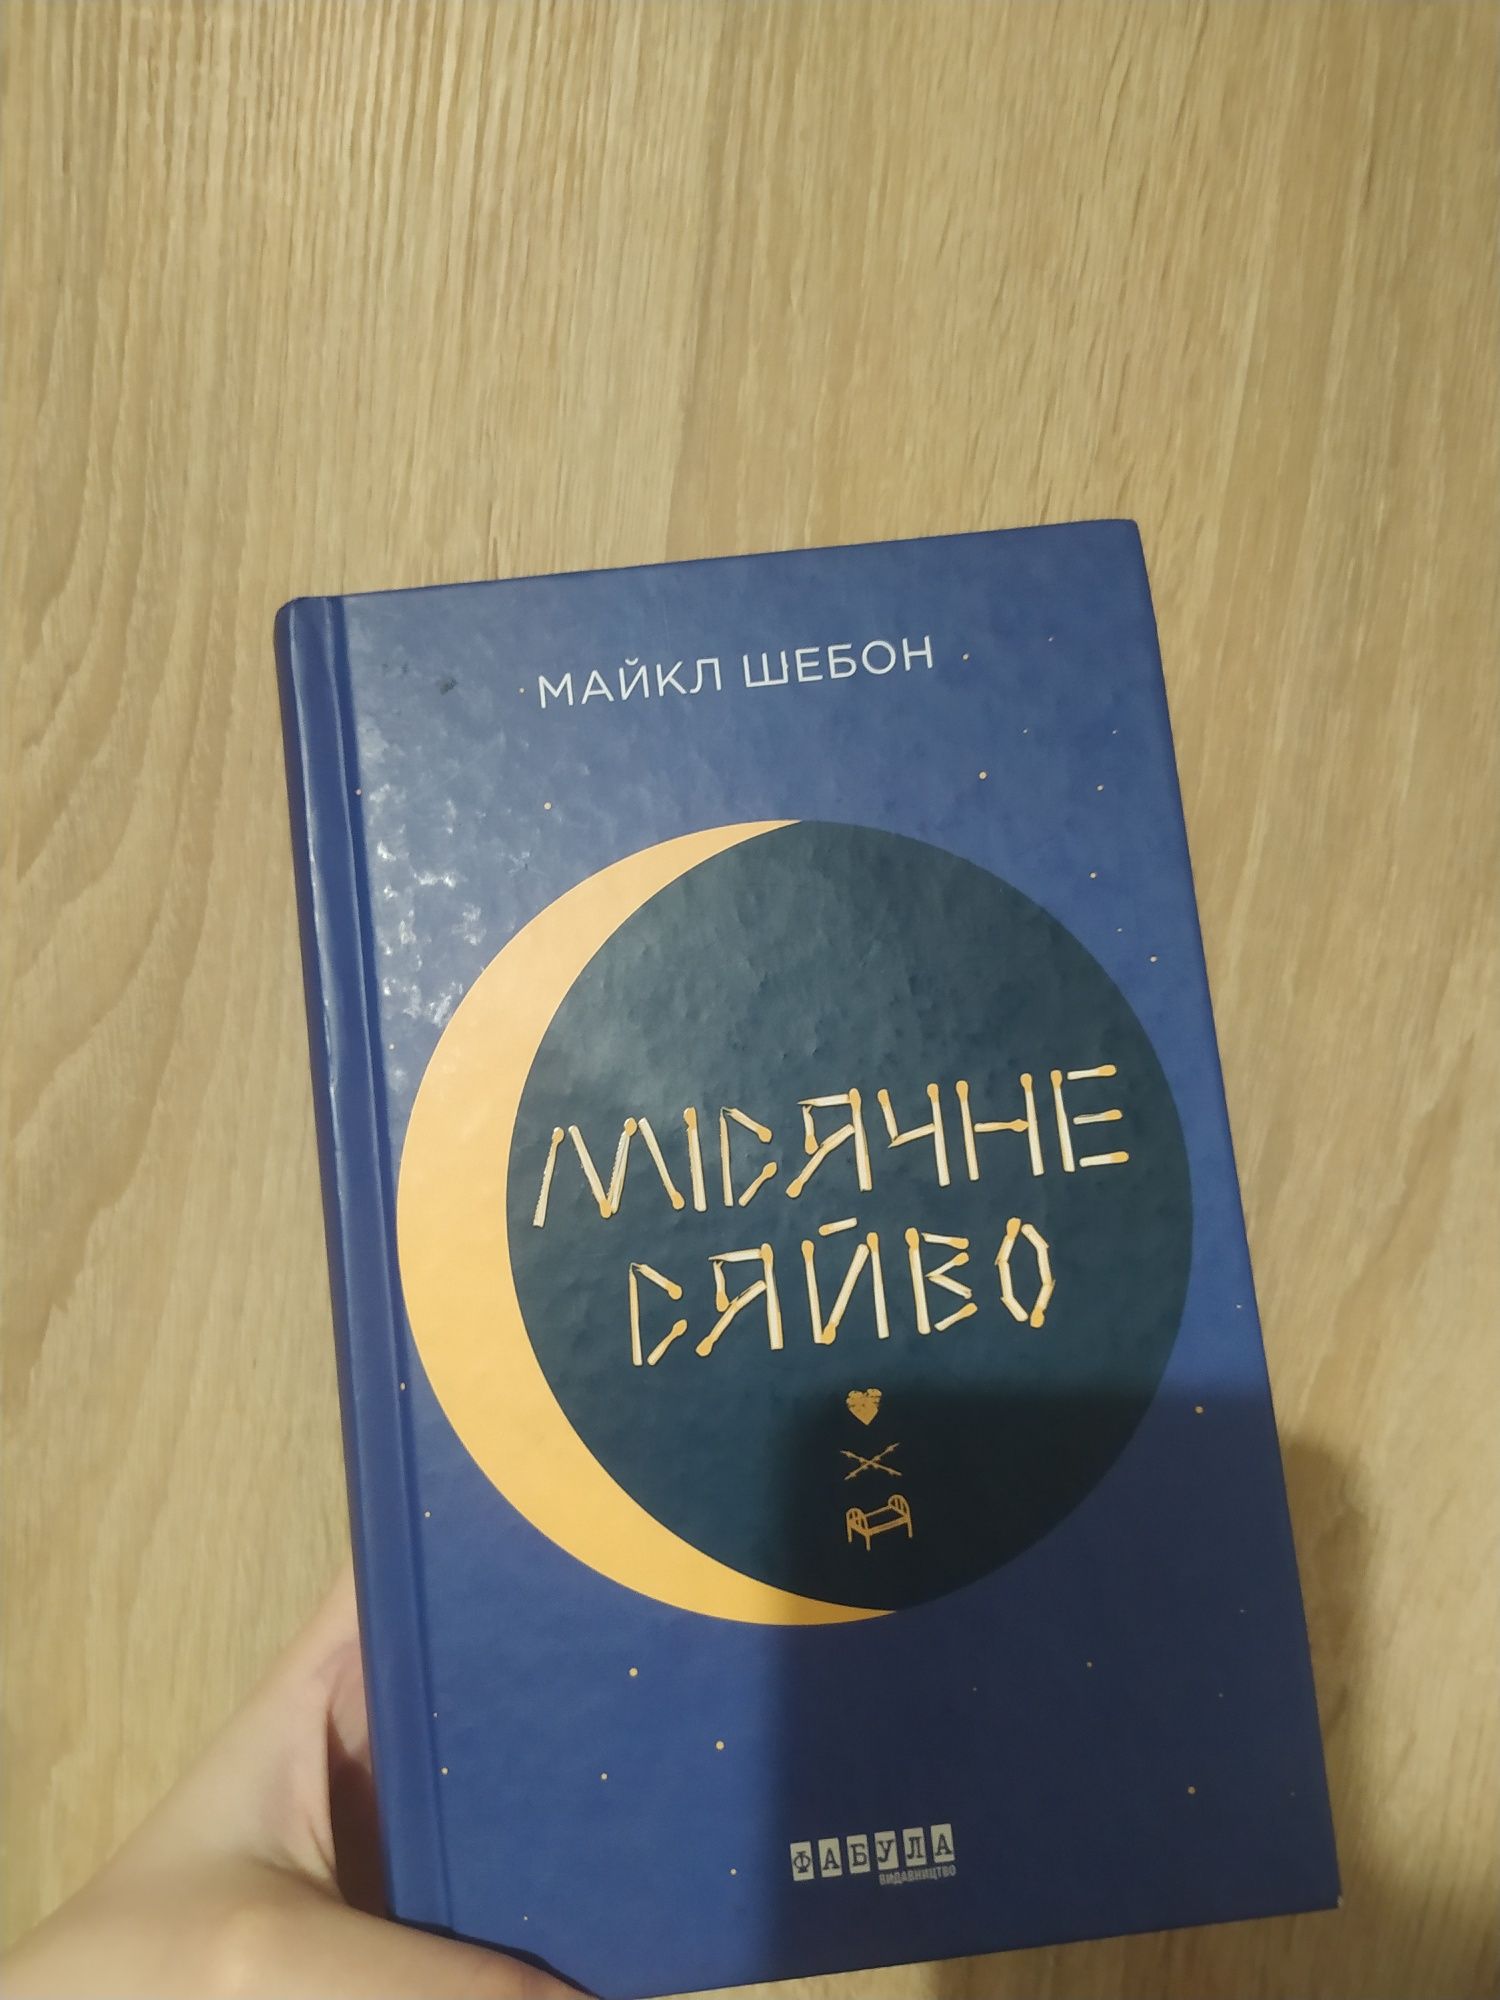 Книги, Анне Гольт "Могила на двох" та Майкл Шебон "Місячне сяйво"